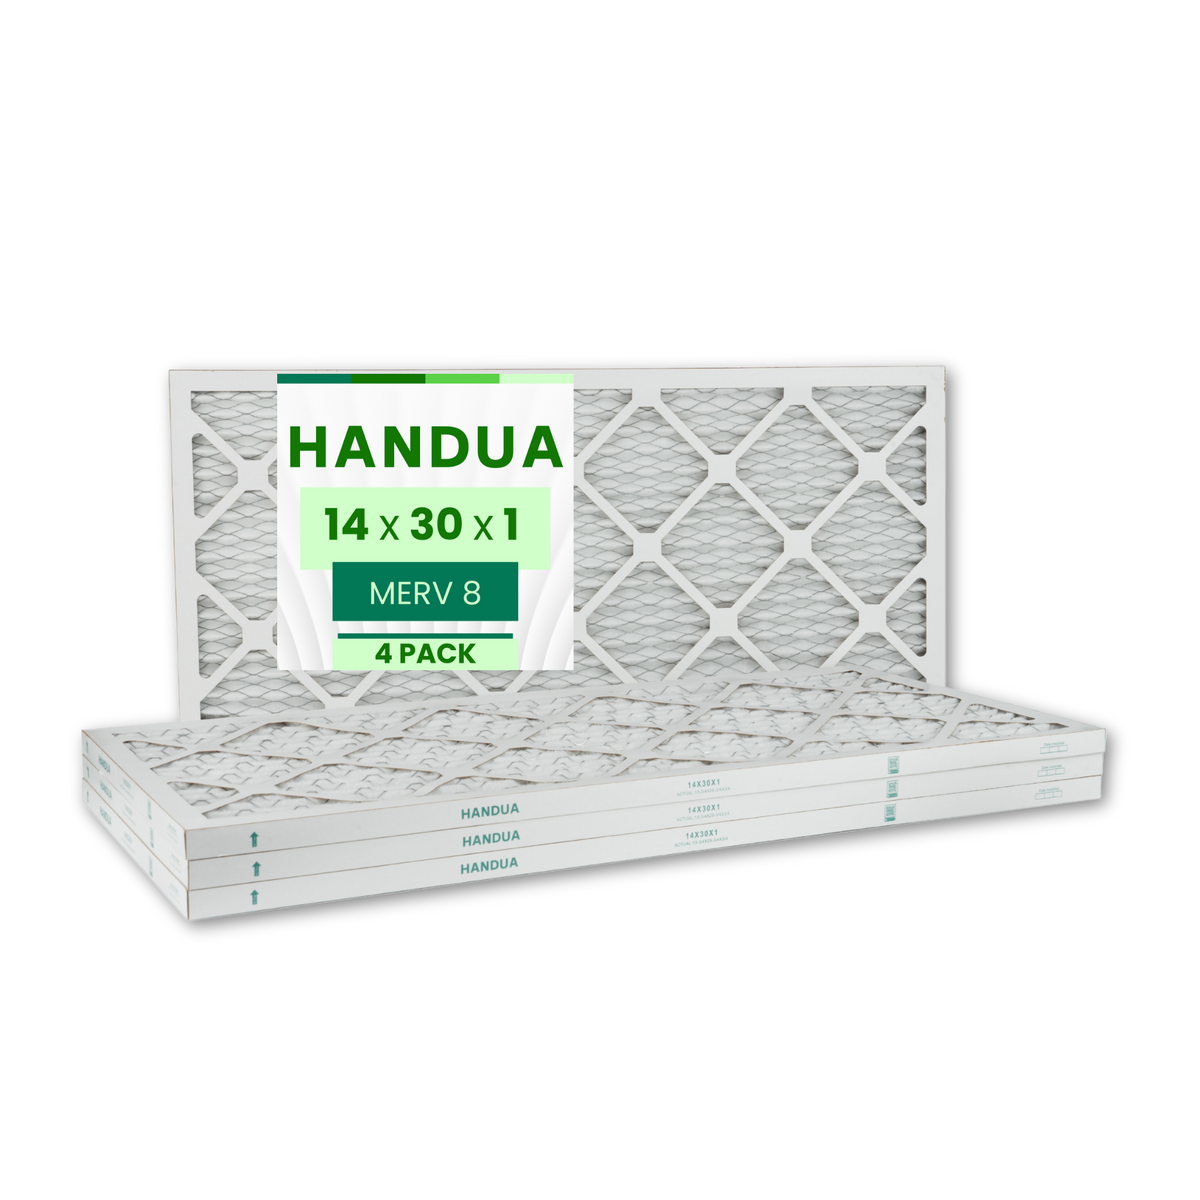 Handua 14x30x1 Air Filter MERV 8 Dust Control, Plated Furnace AC Air Replacement Filter, 4 Pack (Actual Size: 13.75" x 29.75" x 0.75")